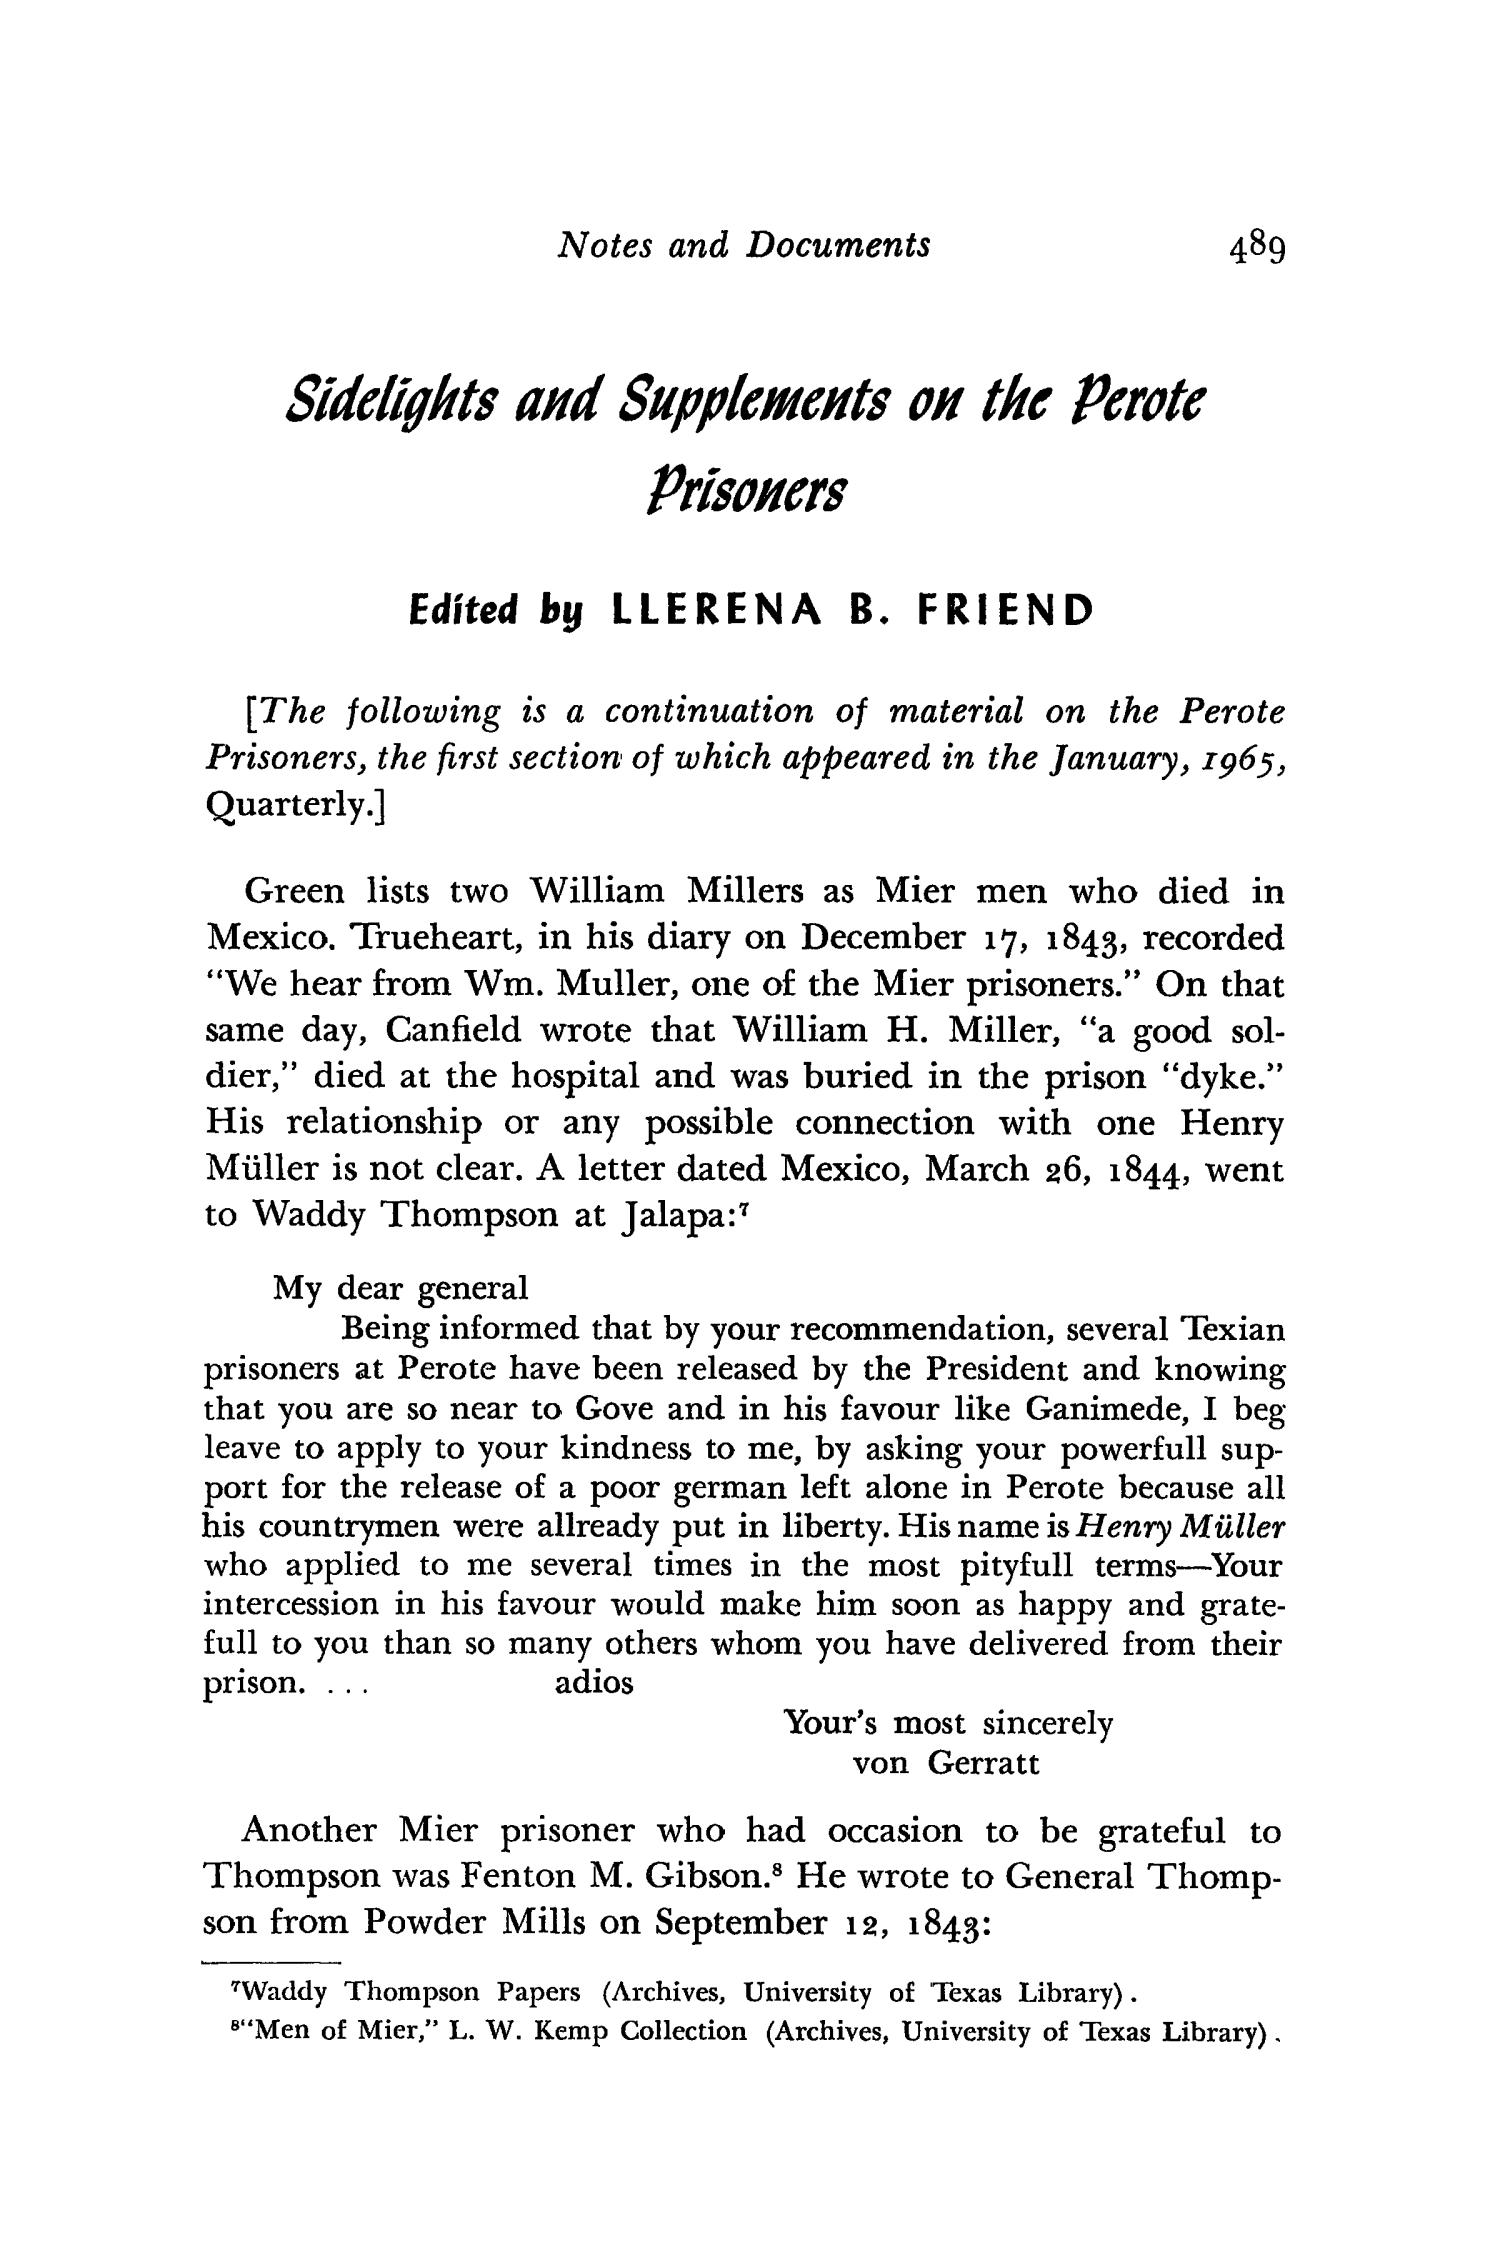 The Southwestern Historical Quarterly, Volume 68, July 1964 - April, 1965
                                                
                                                    489
                                                